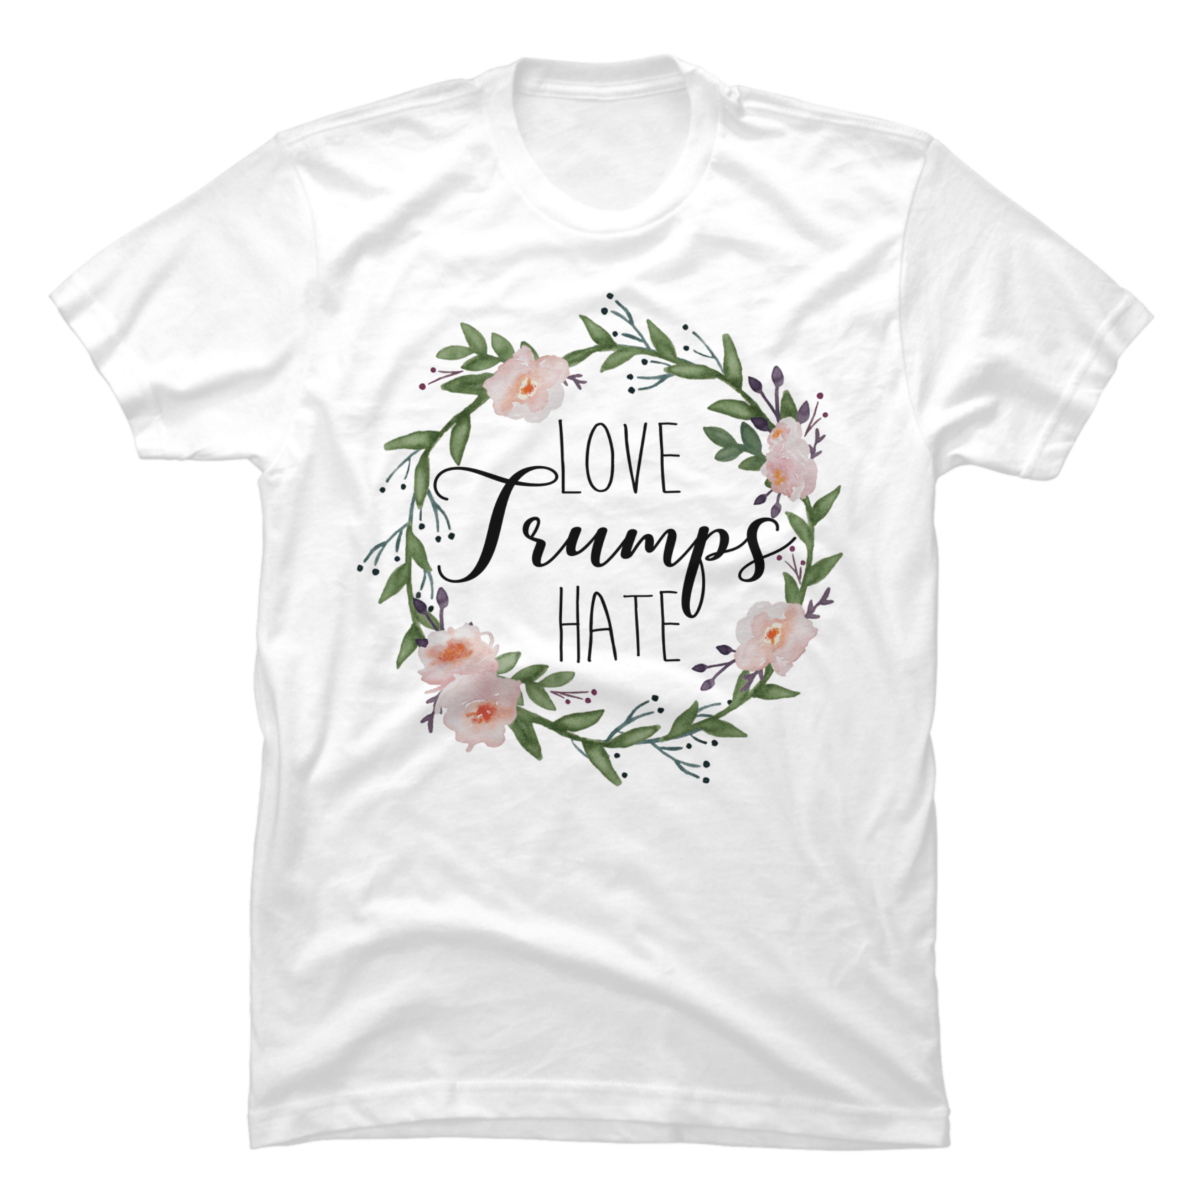 love trumps hate tee shirt